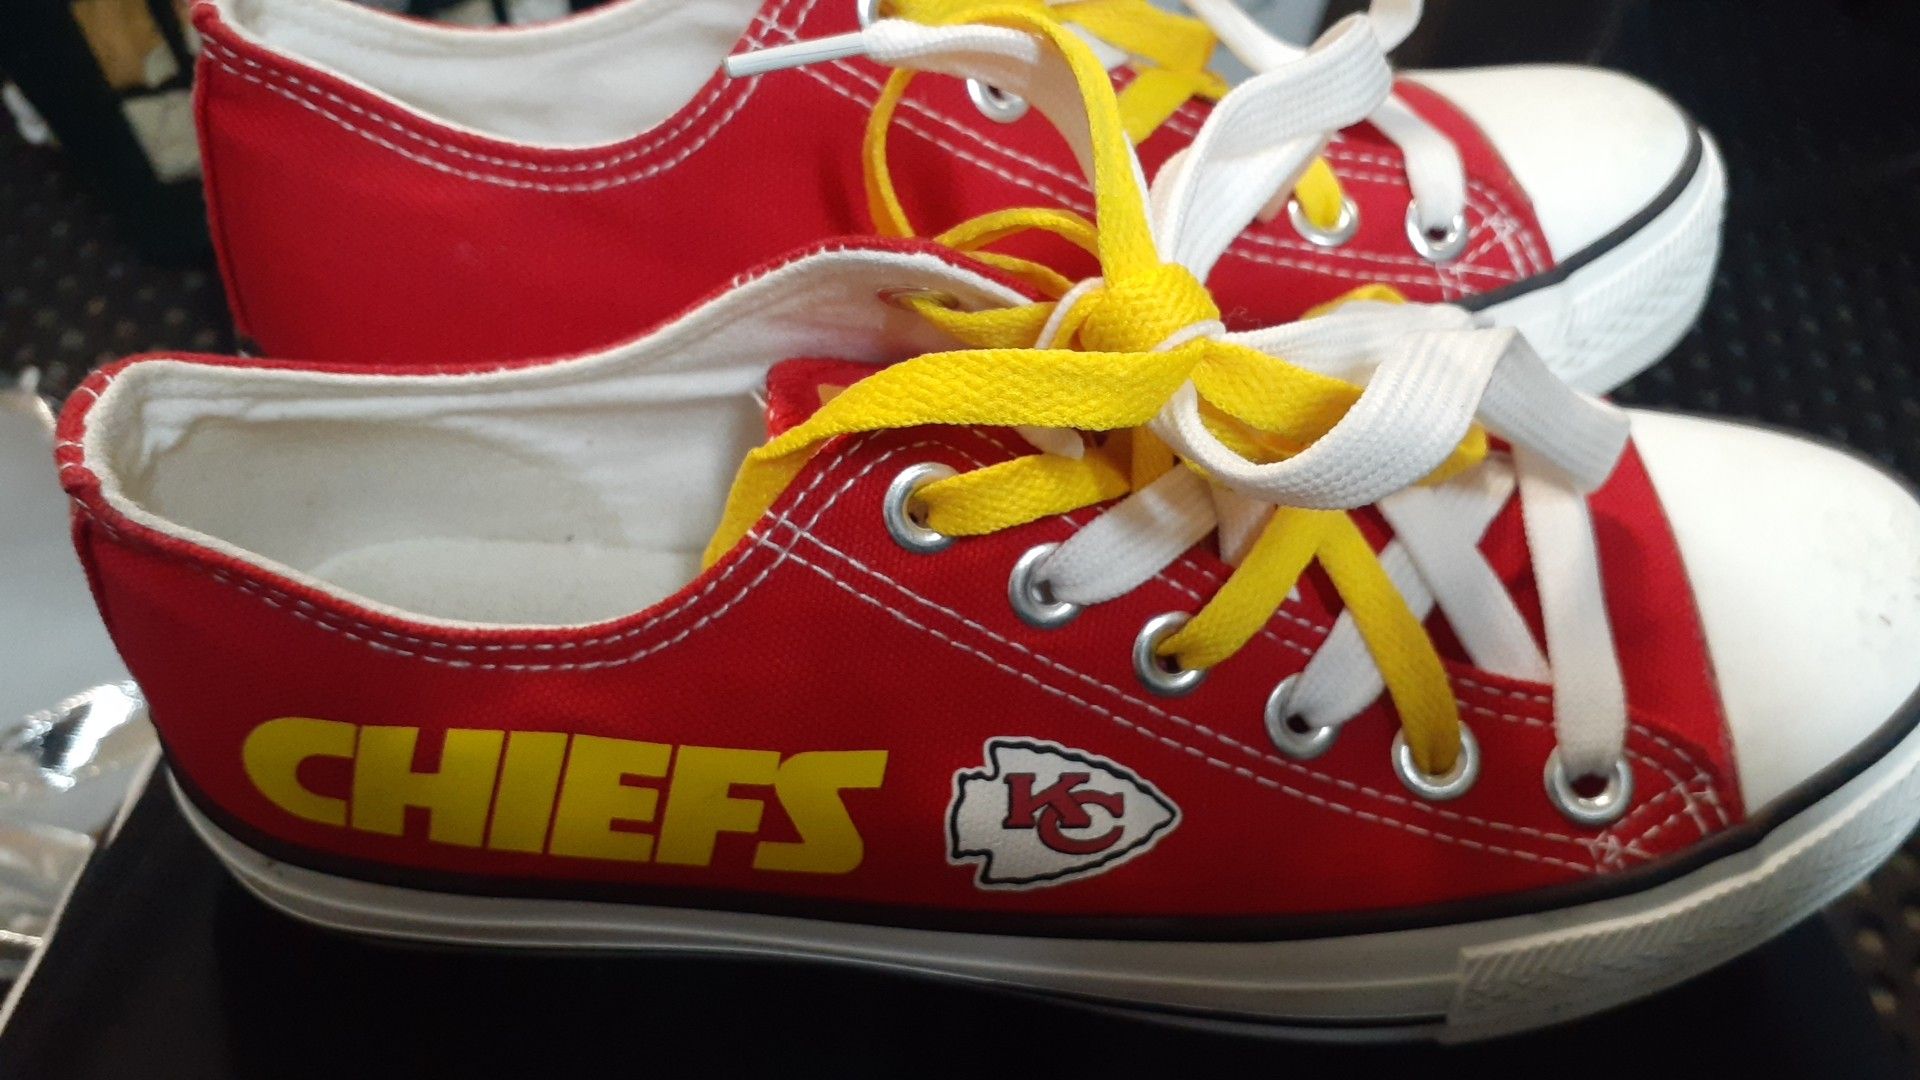 Converse chiefs shoes